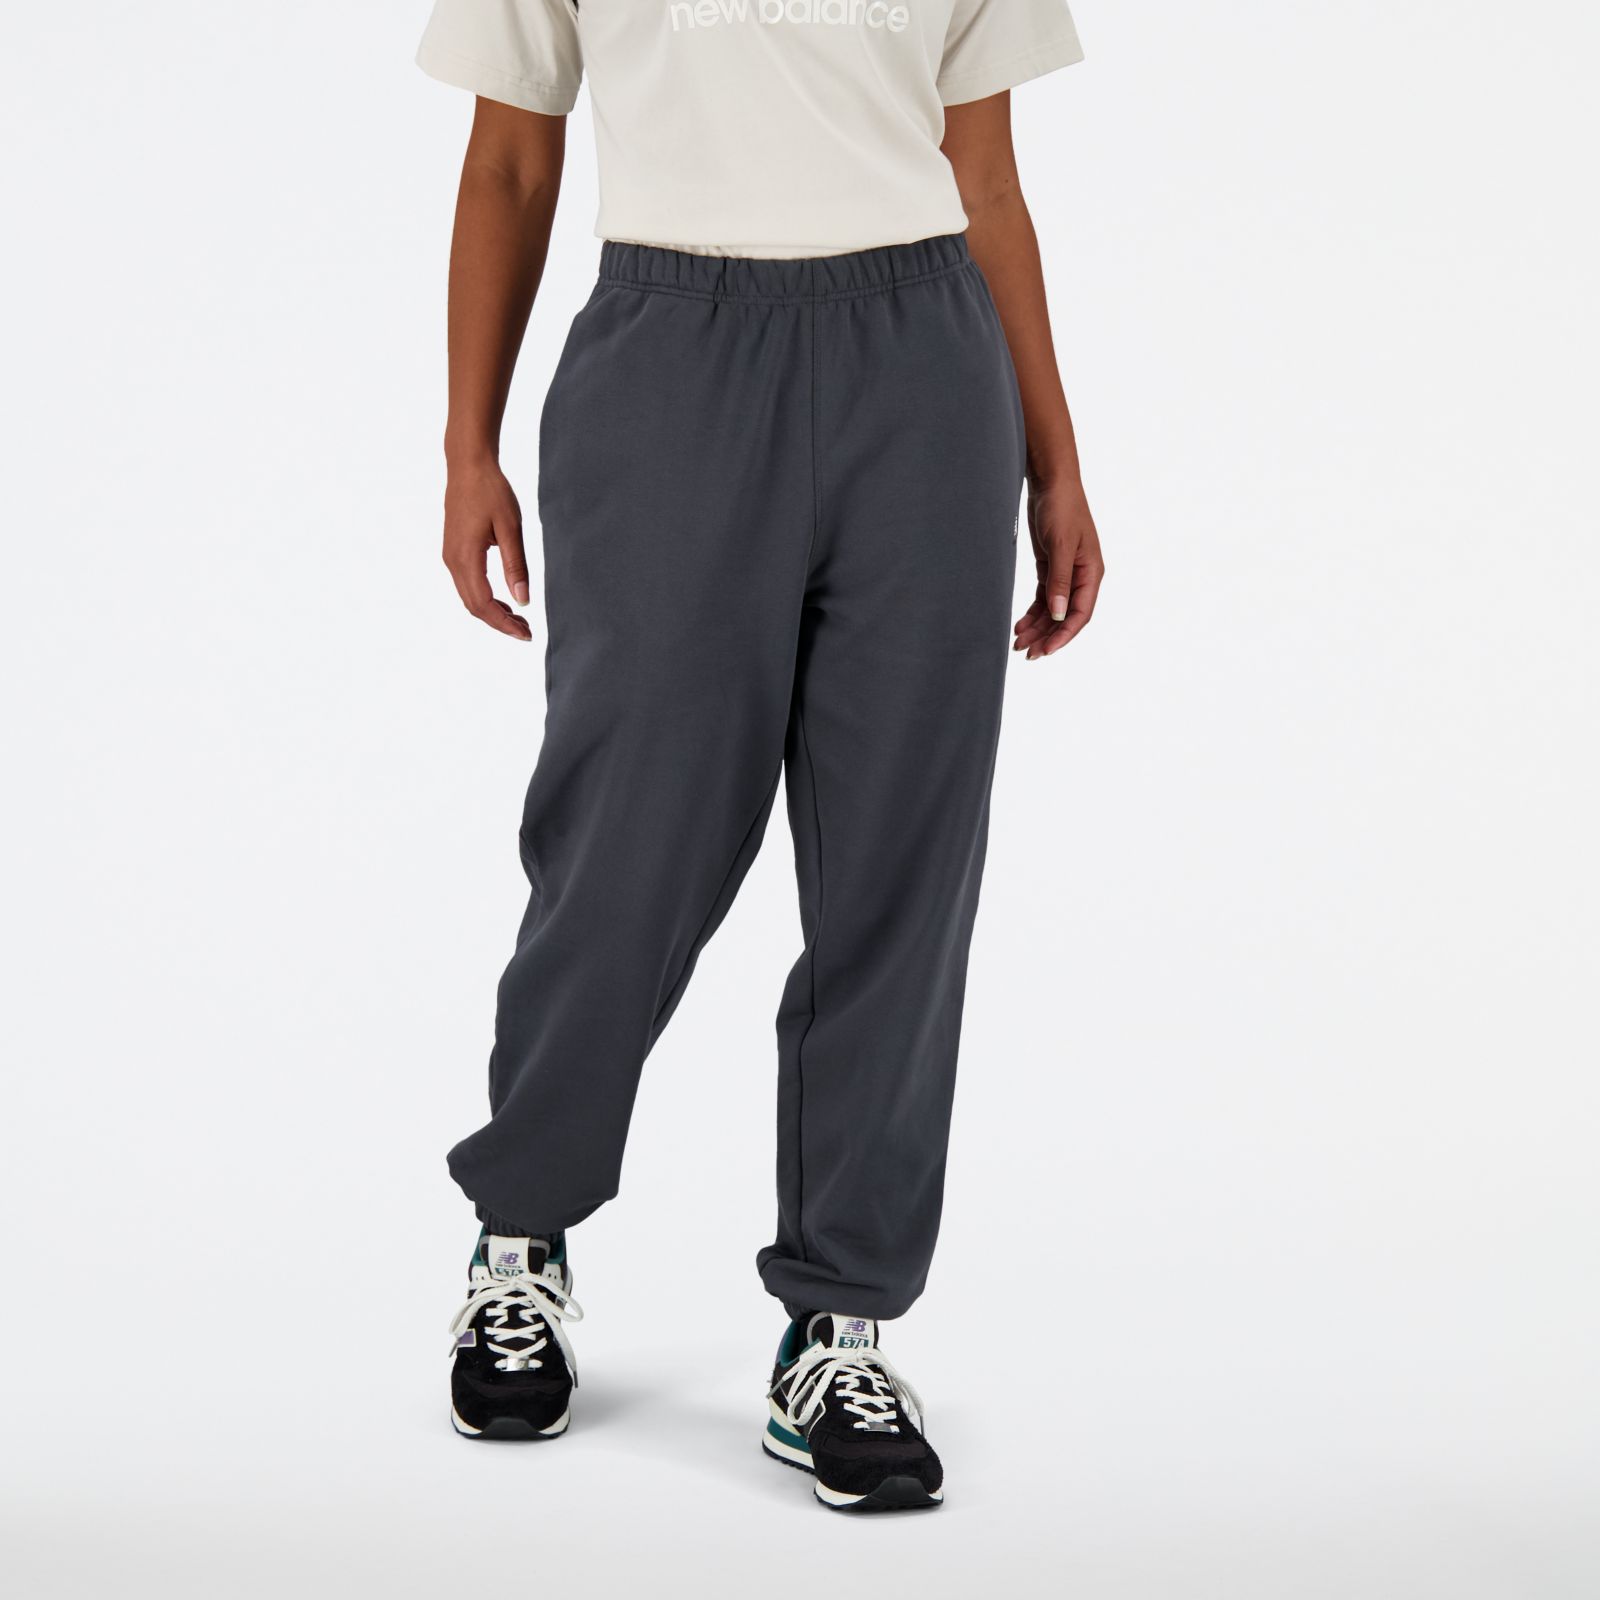 Women's Sport Essentials Premium Fleece Pant Apparel - New Balance